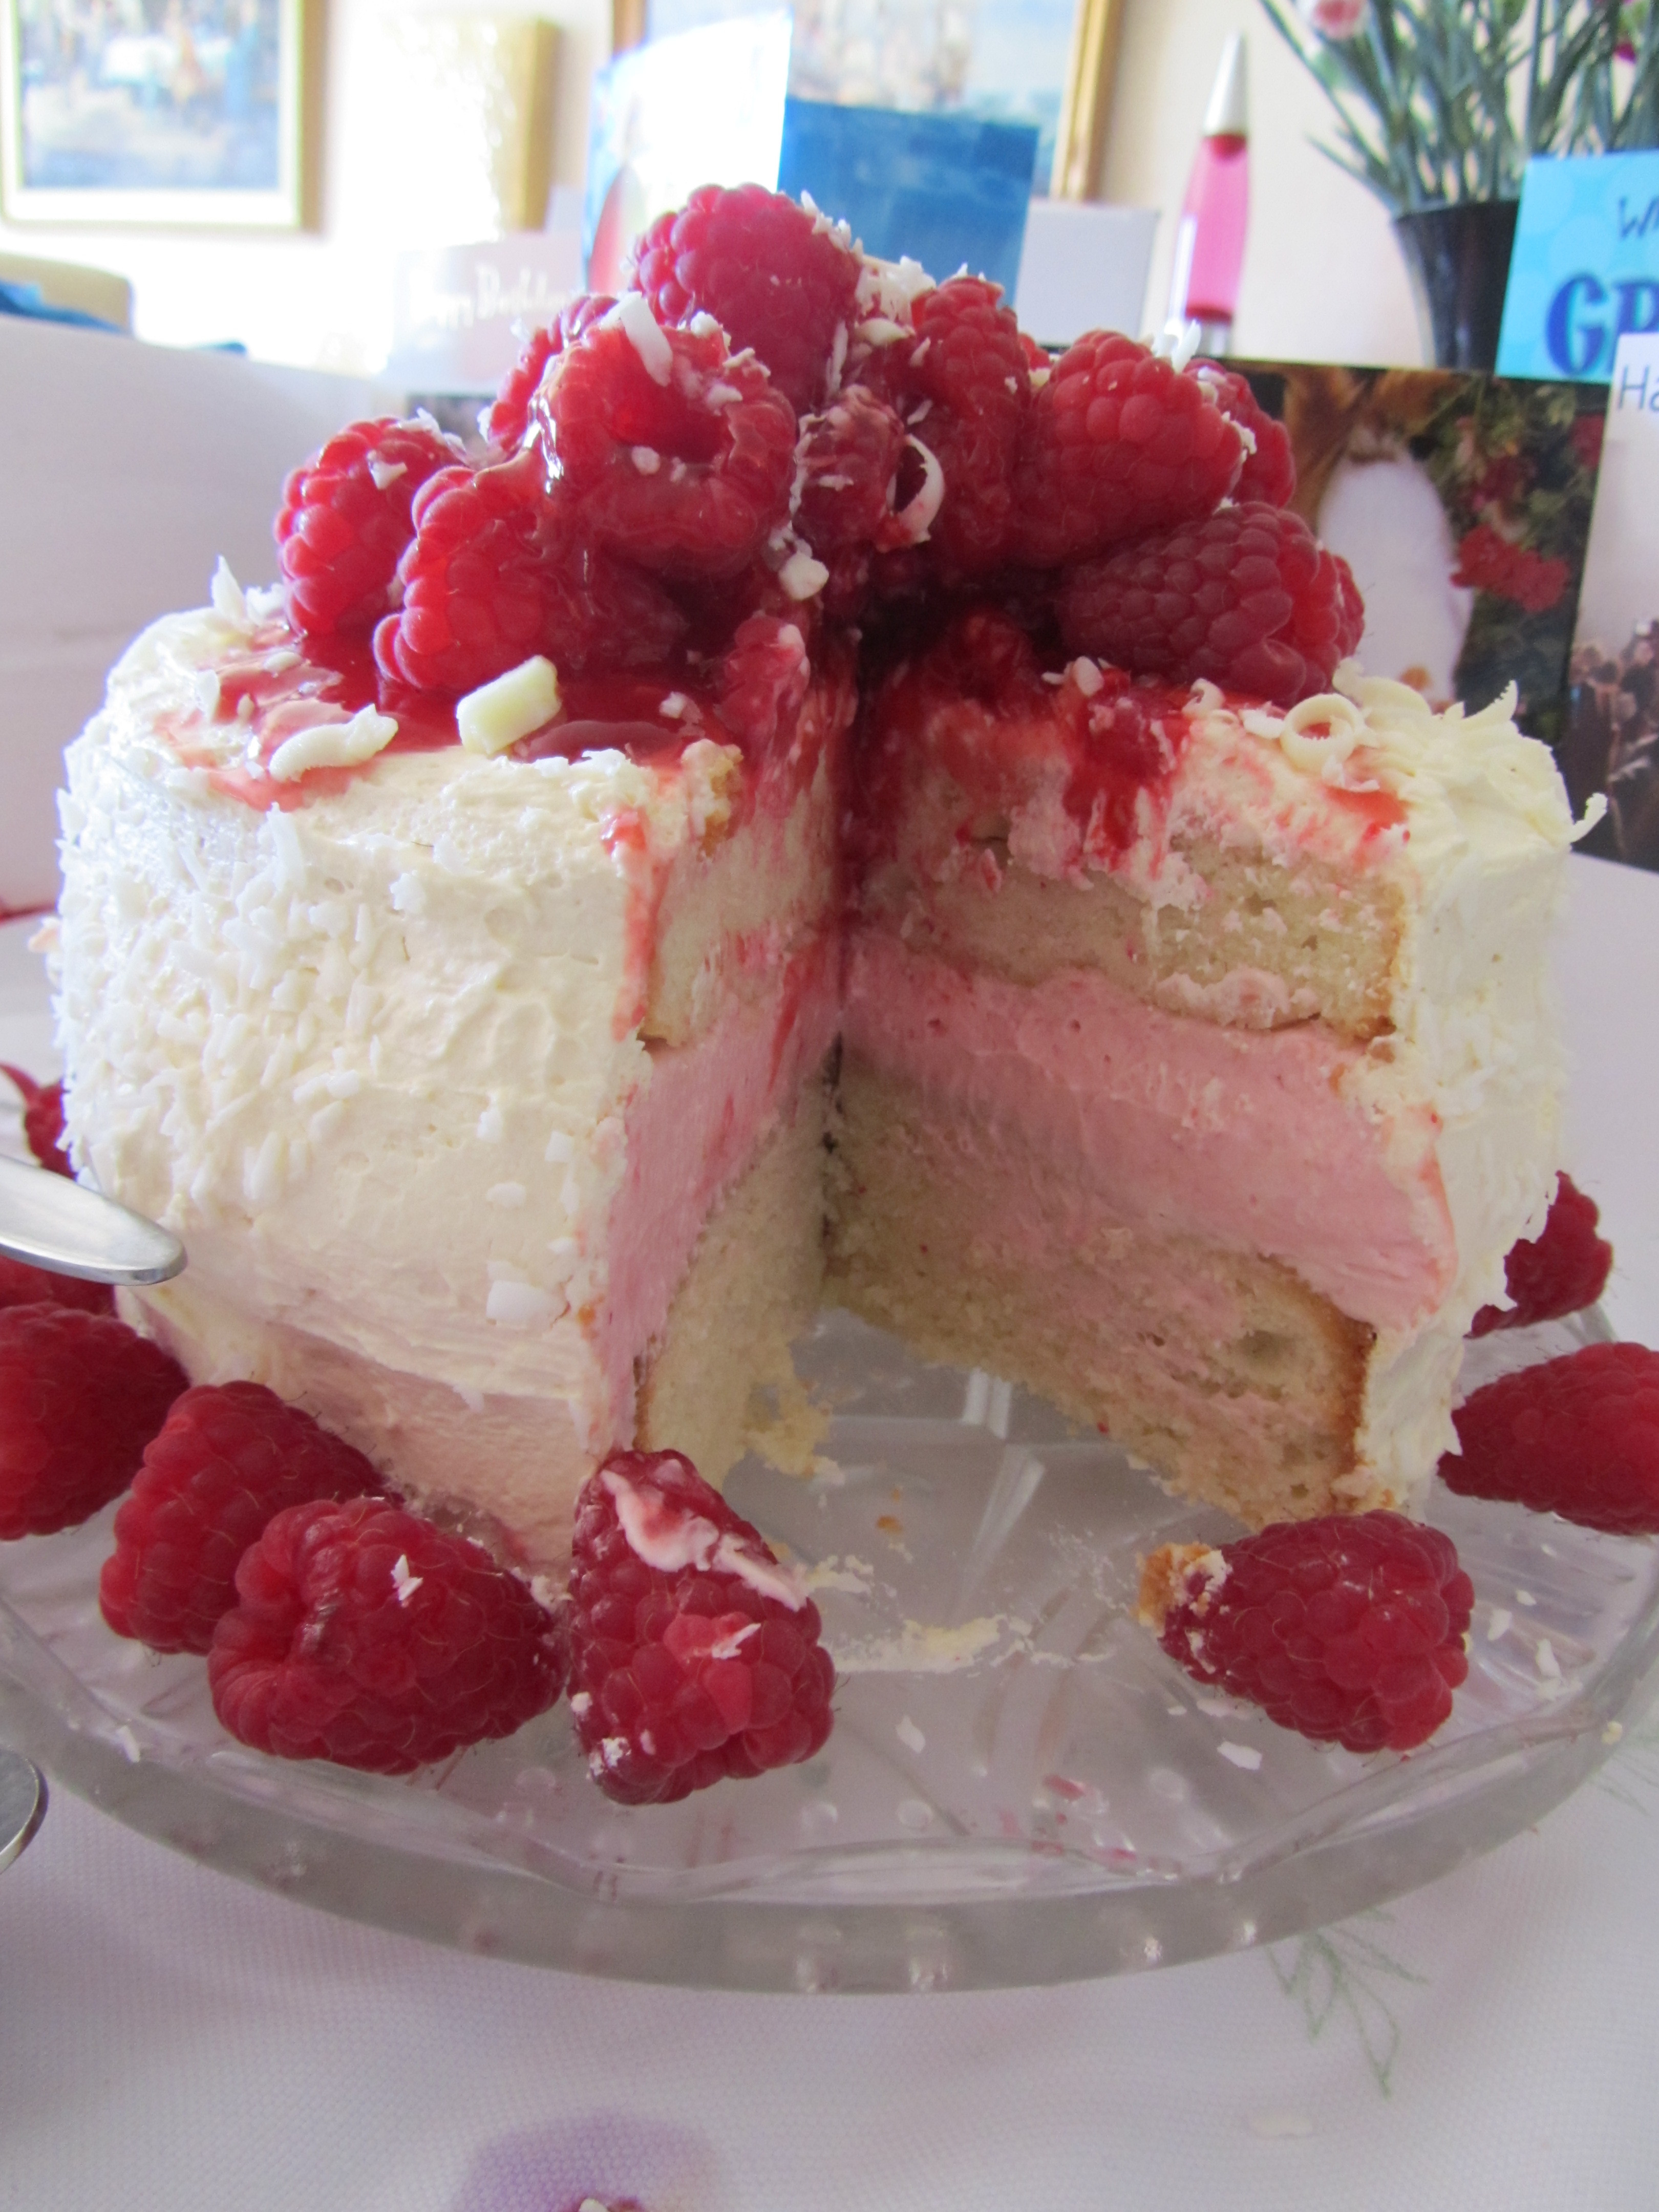 Raspberry Mousse Filling For Wedding Cake
 Malibu and white chocolate raspberry mousse cake